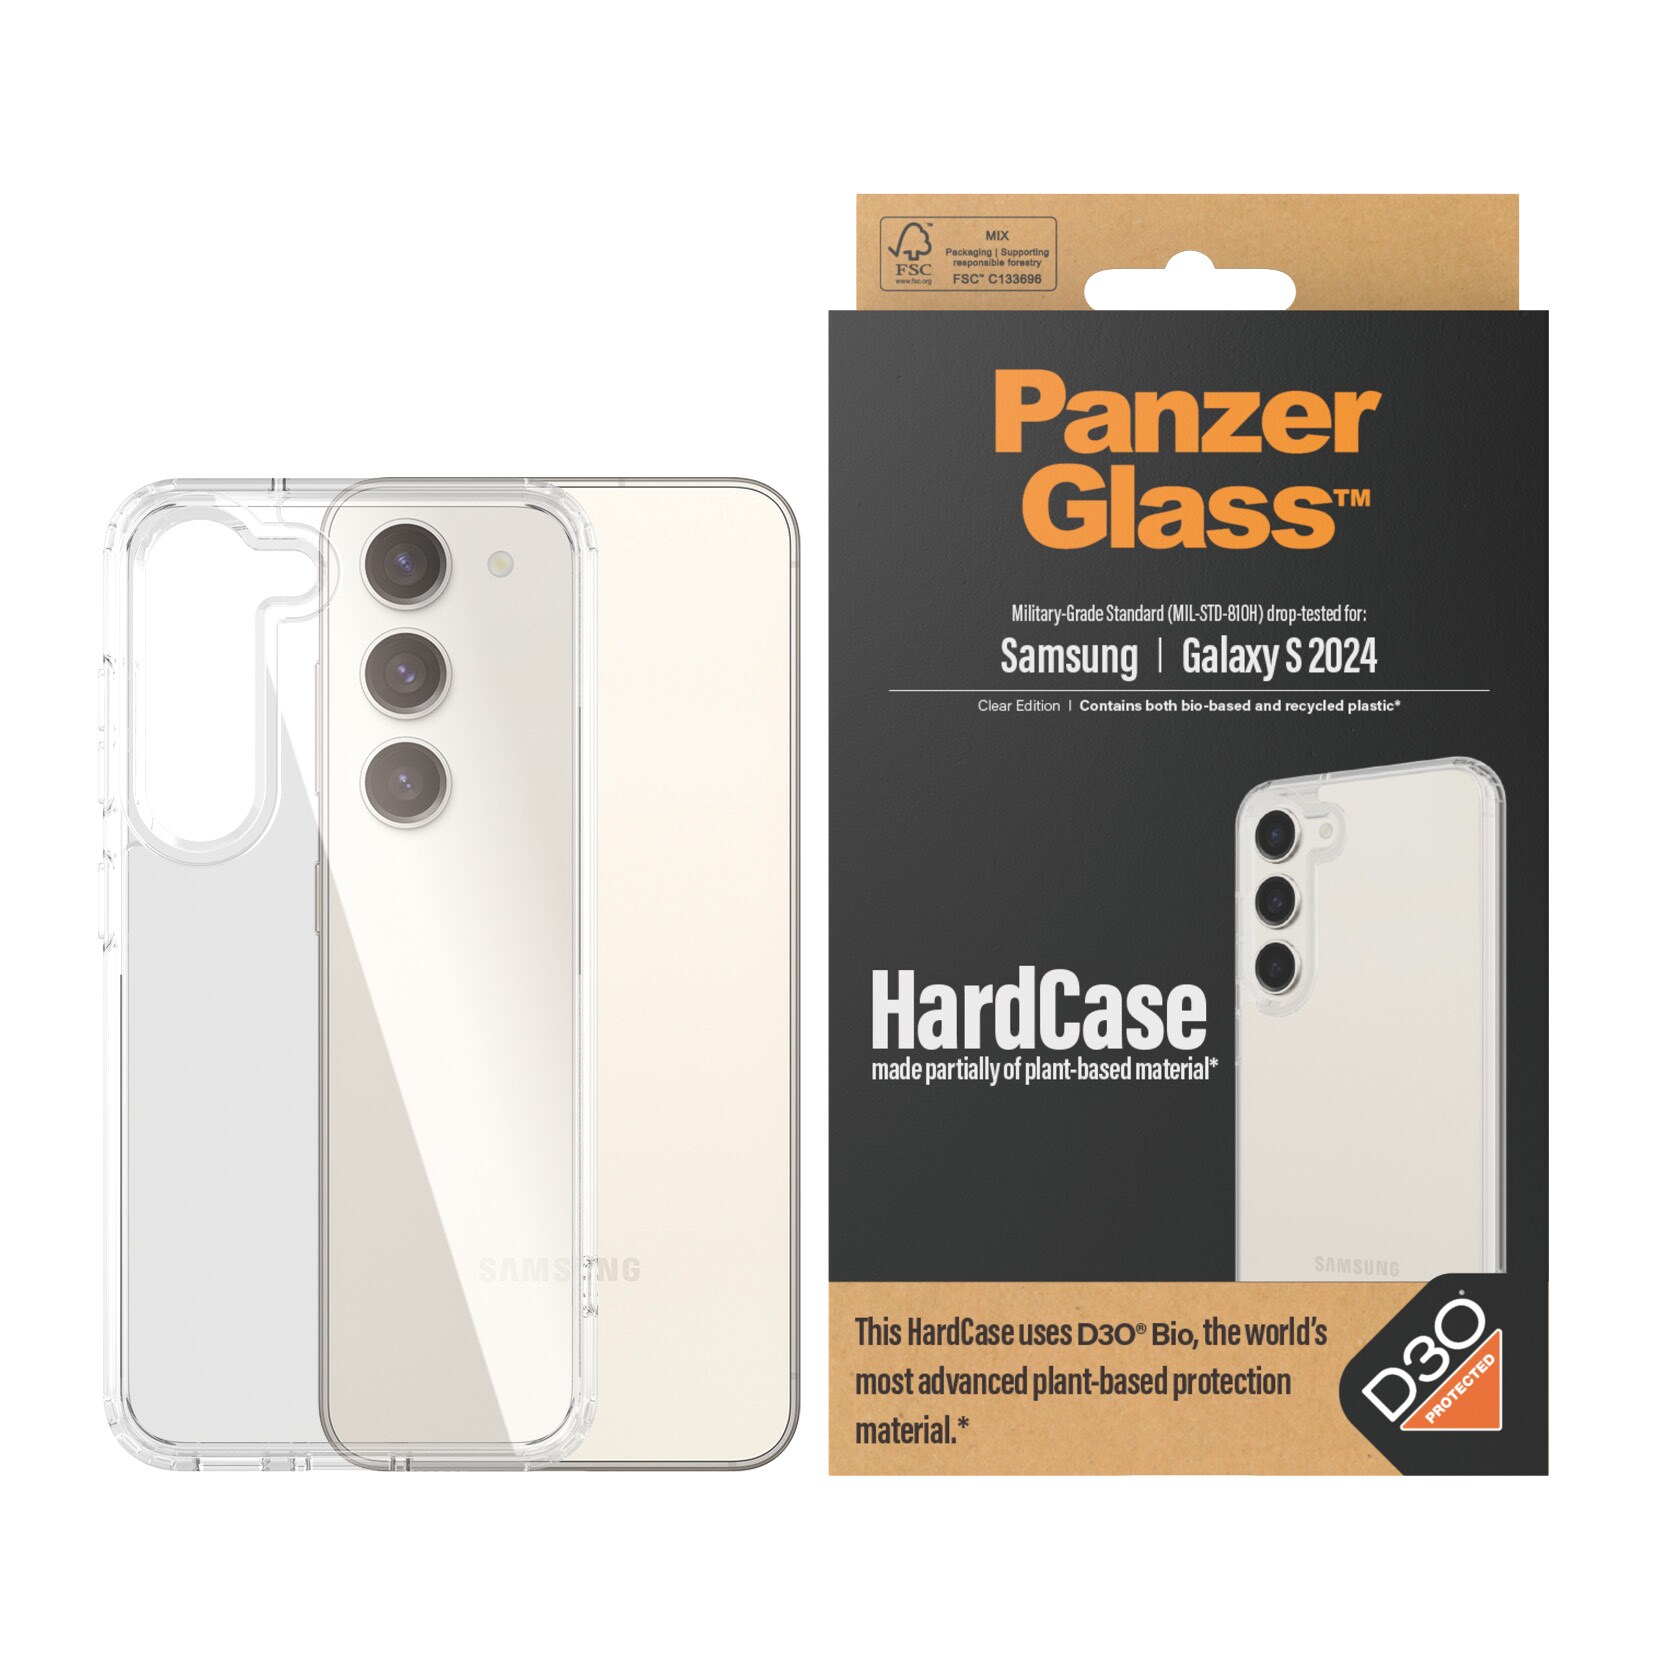 PanzerGlass® HardCase with D3O® Samsung Galaxy S24 Ultra